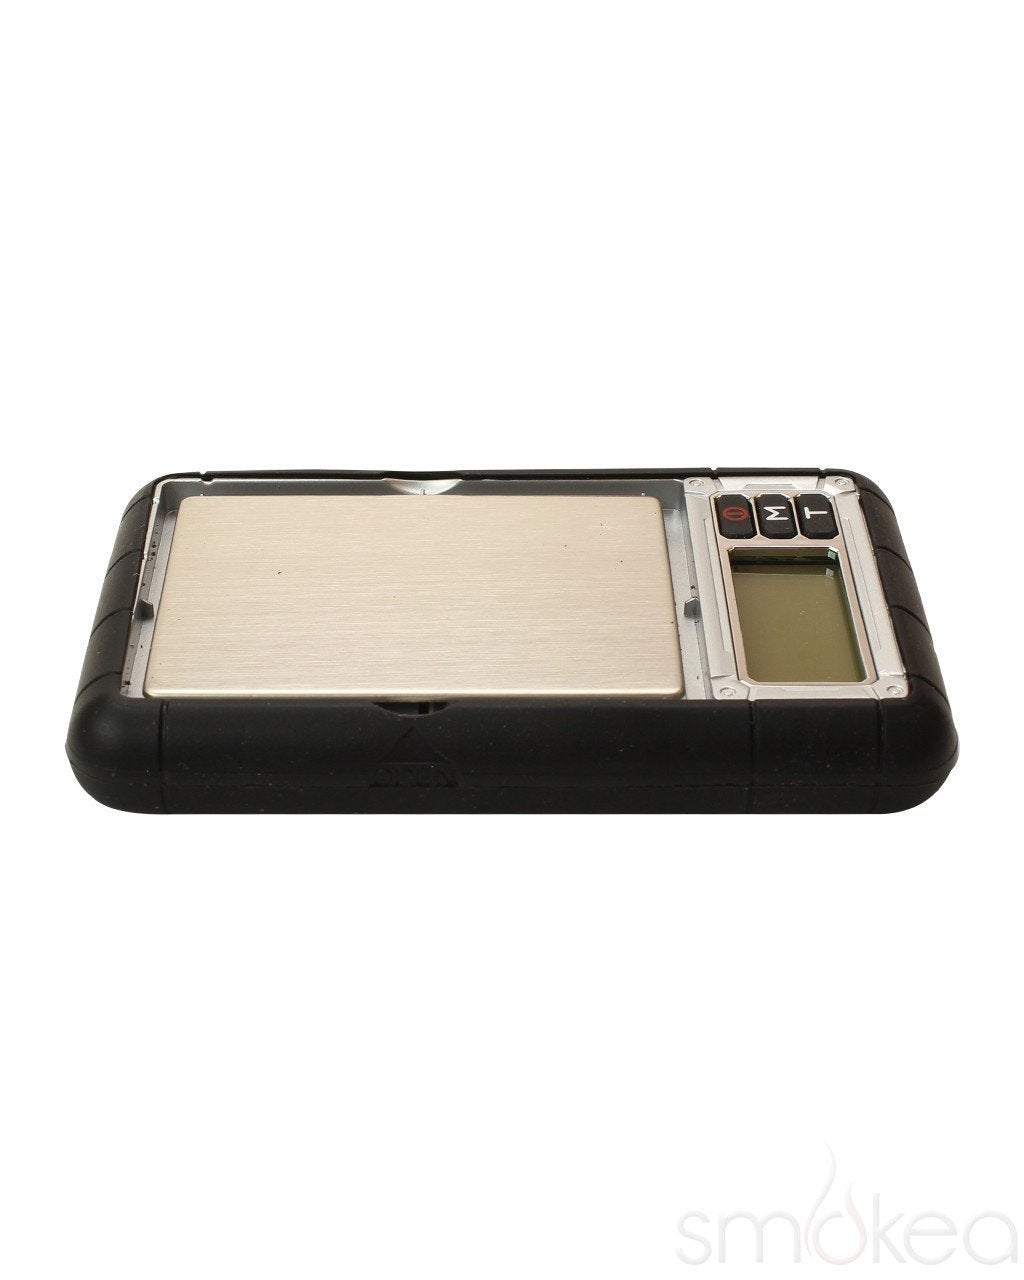 My Weigh DuraScale D2 660 Digital Pocket Scale